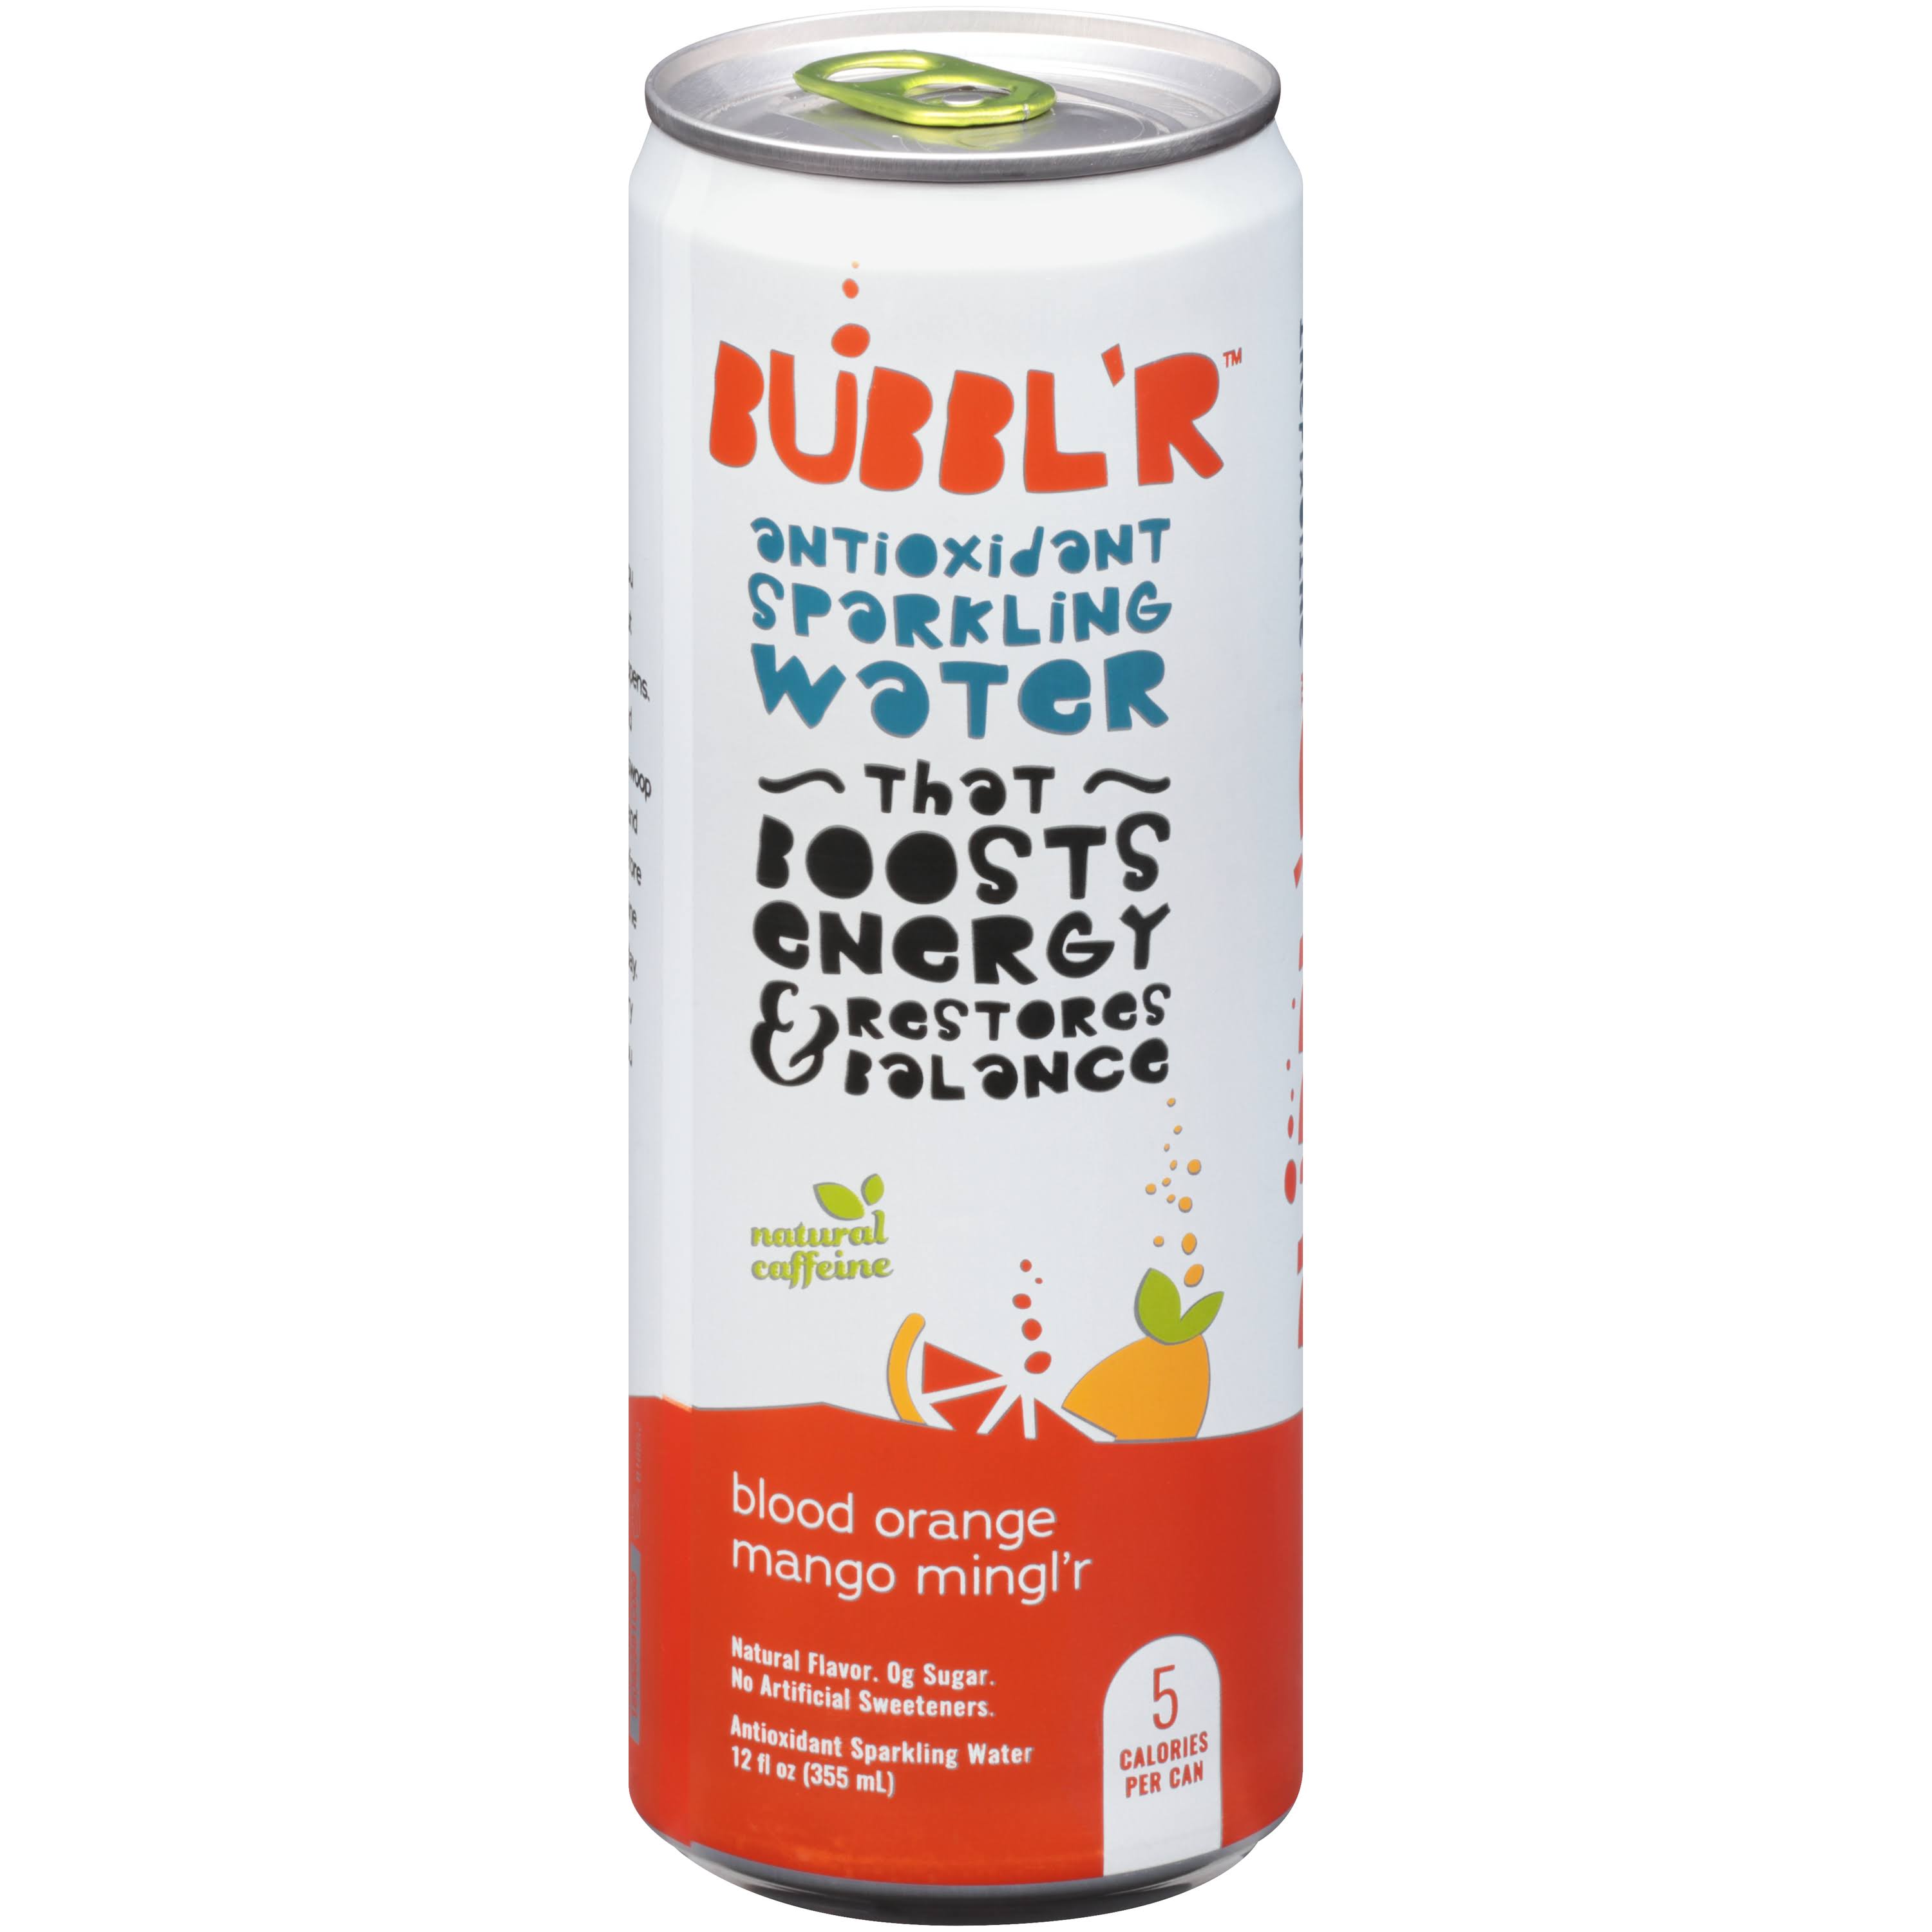 Bubblr Sparkling Water, Antioxidant, Blood Orange Mango Mingl'r - 12 fl oz